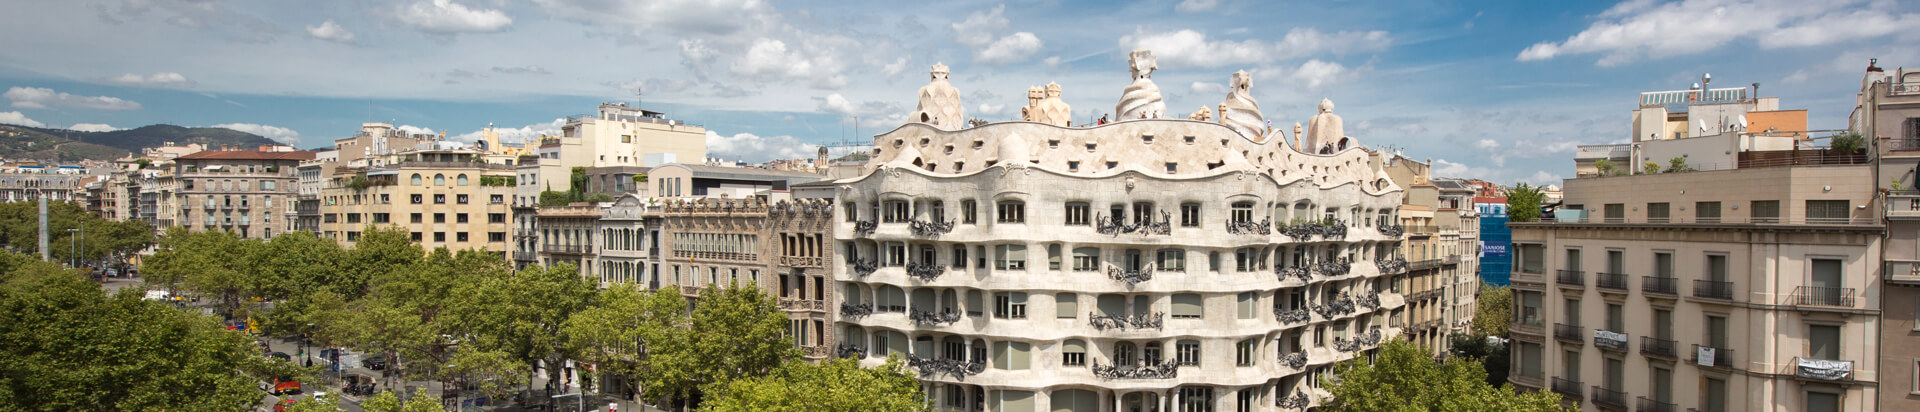 casa mila gaudi modernism barcelona